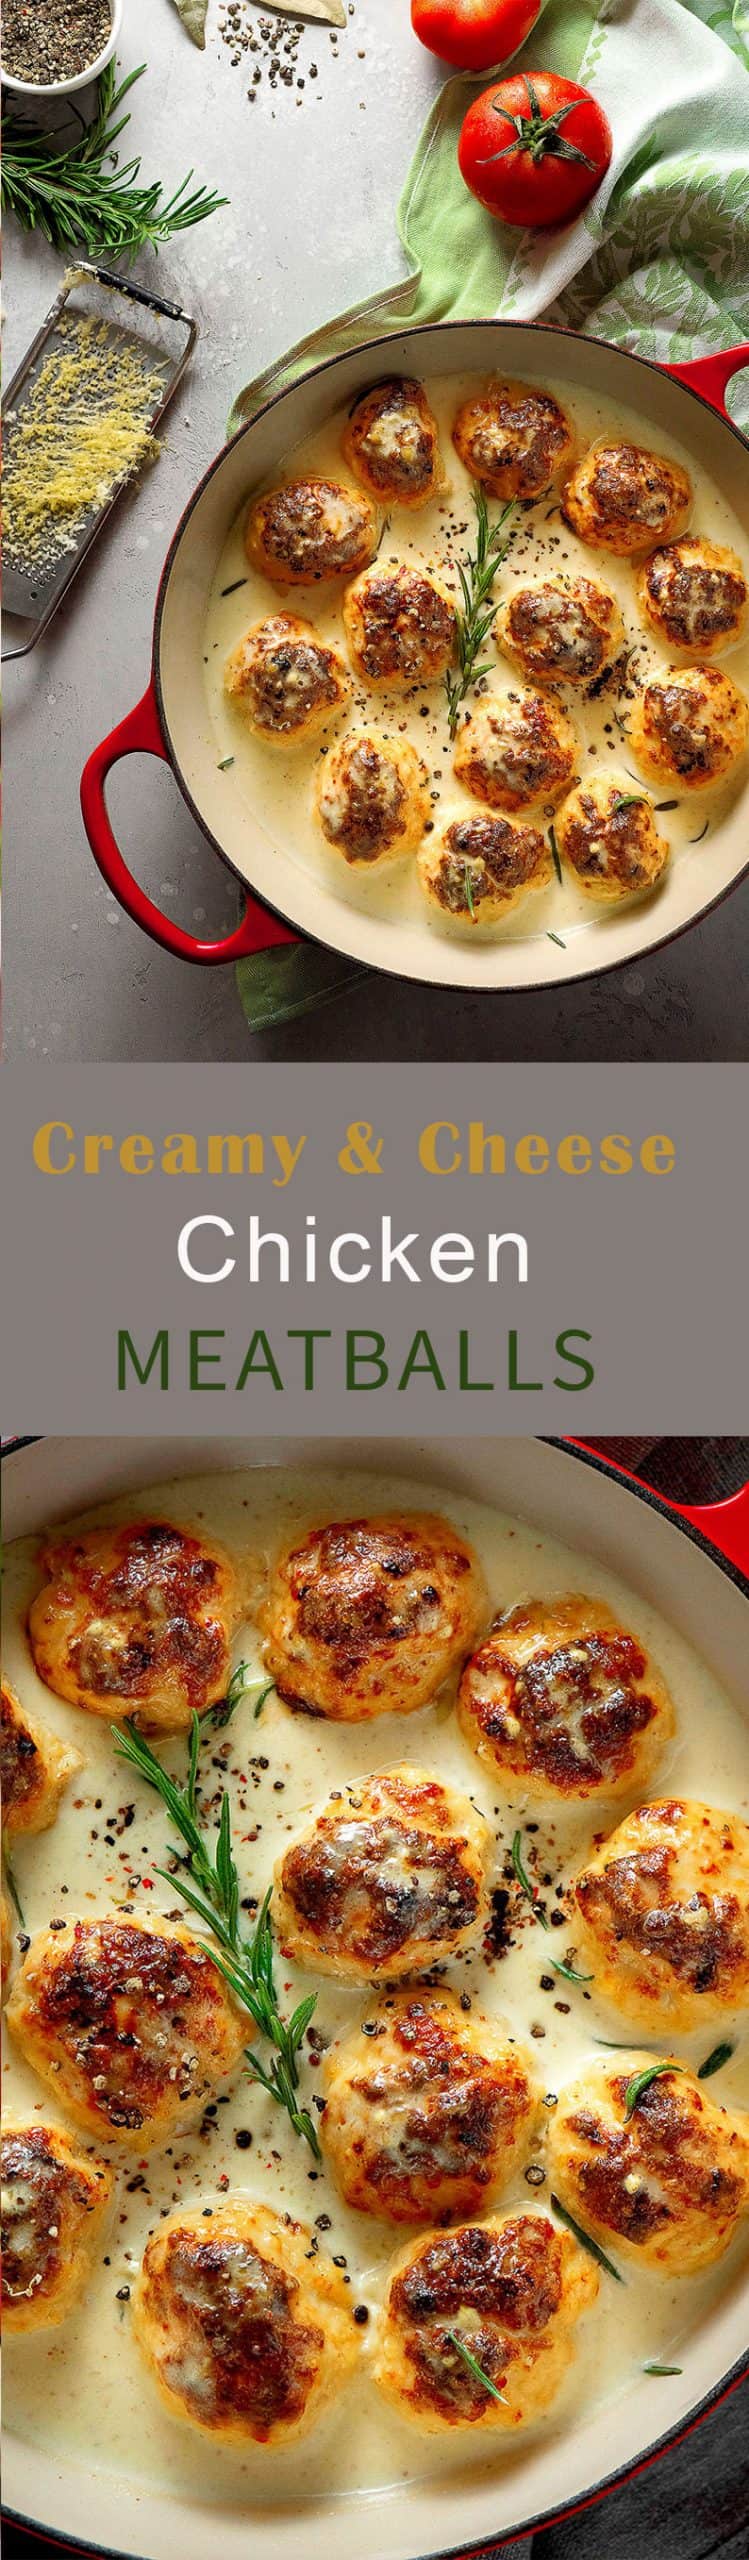 chicken-meatball-recipe